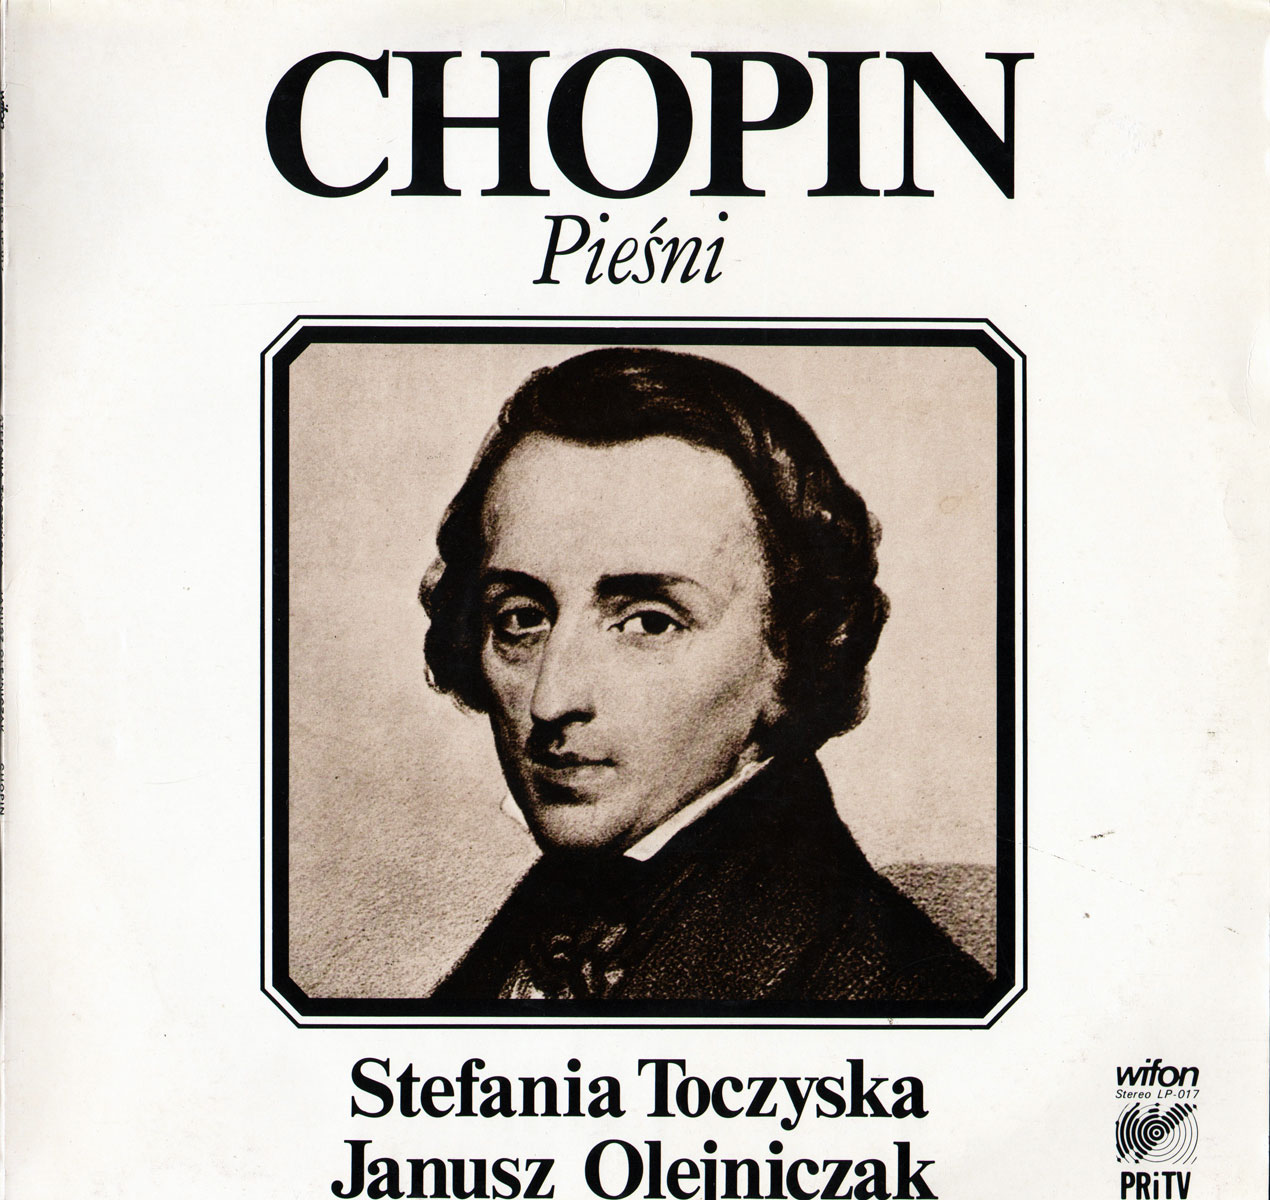 Chopin - Pieśni: Janusz Olejniczak, Stefania Toczyska  [по заказу польской фирмы WIFON, LP 017]